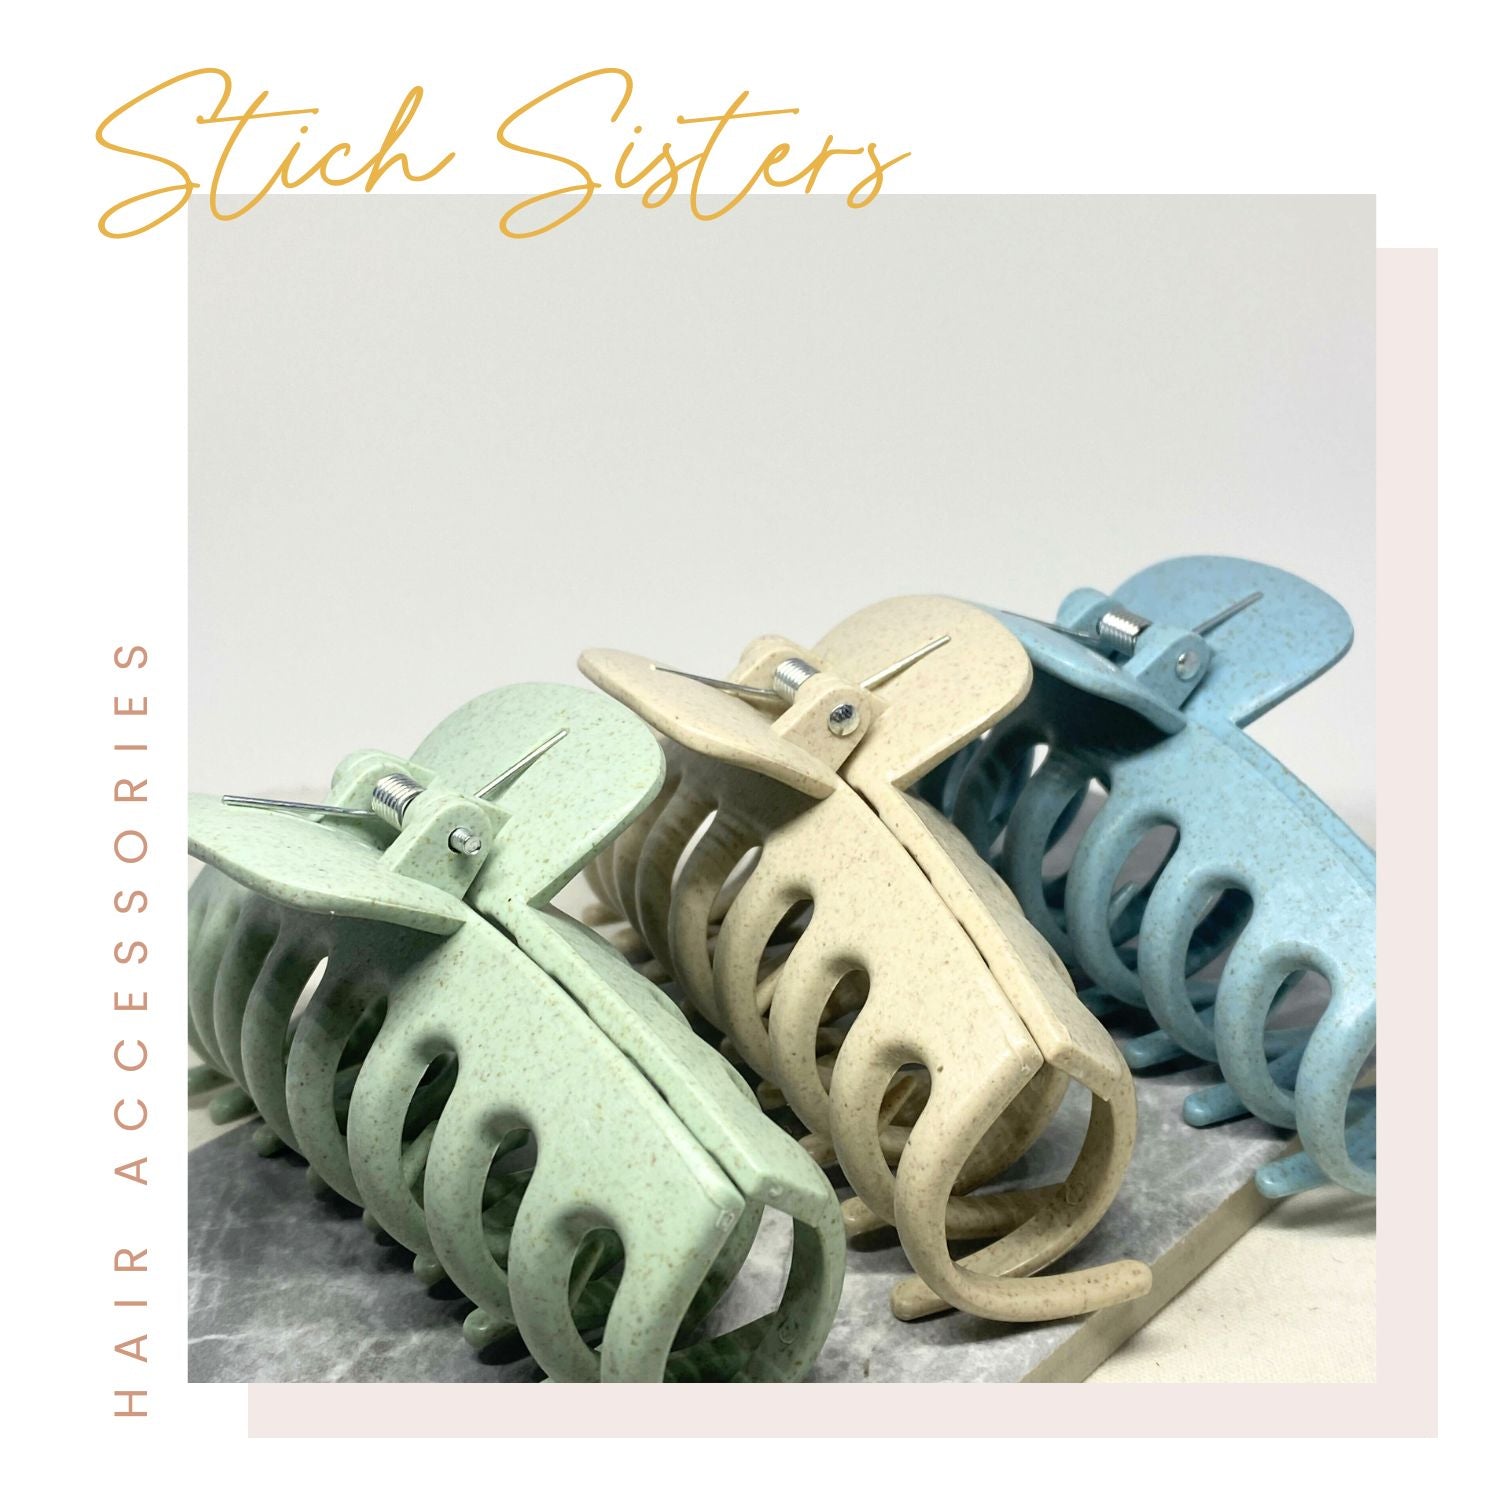 Stitch Sisters